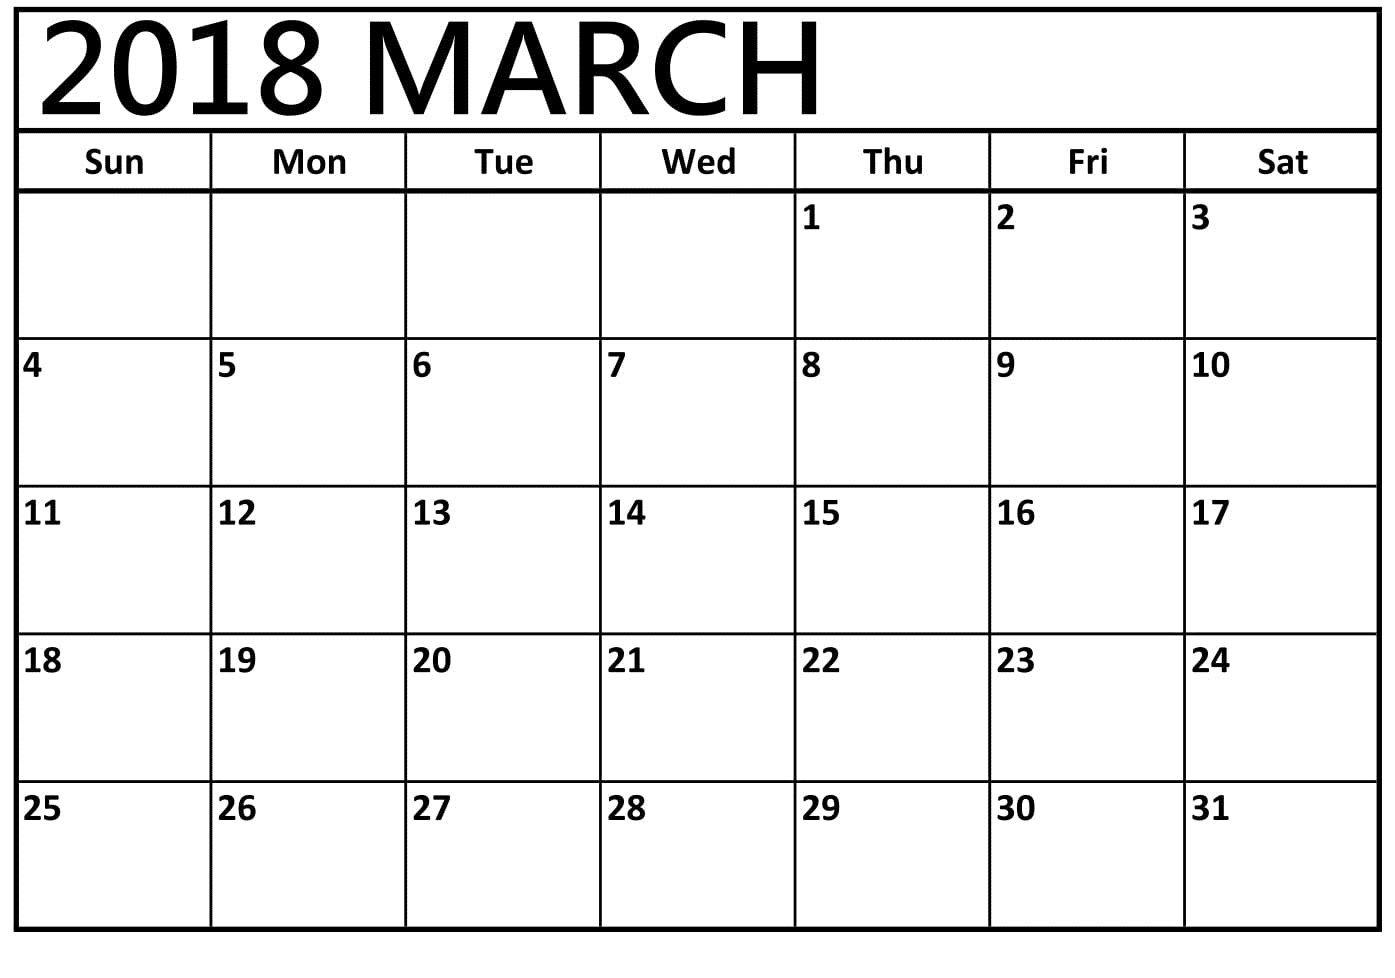 March 2018 Calendar Wallpapers - Wallpaper Cave